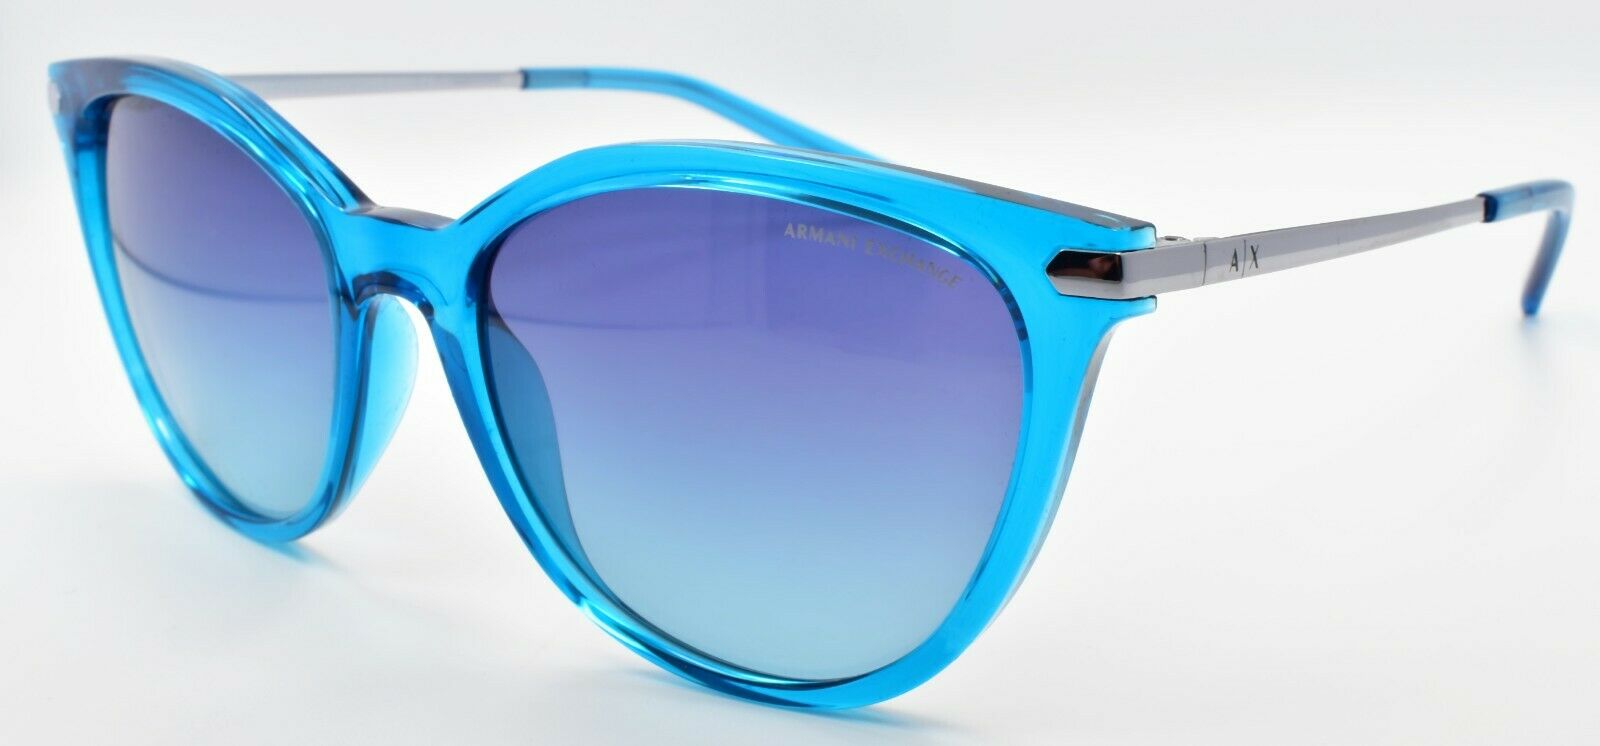 1-Armani Exchange AX4107S 82374S Women's Sunglasses Light Blue / Azure Gradient-8056597424264-IKSpecs